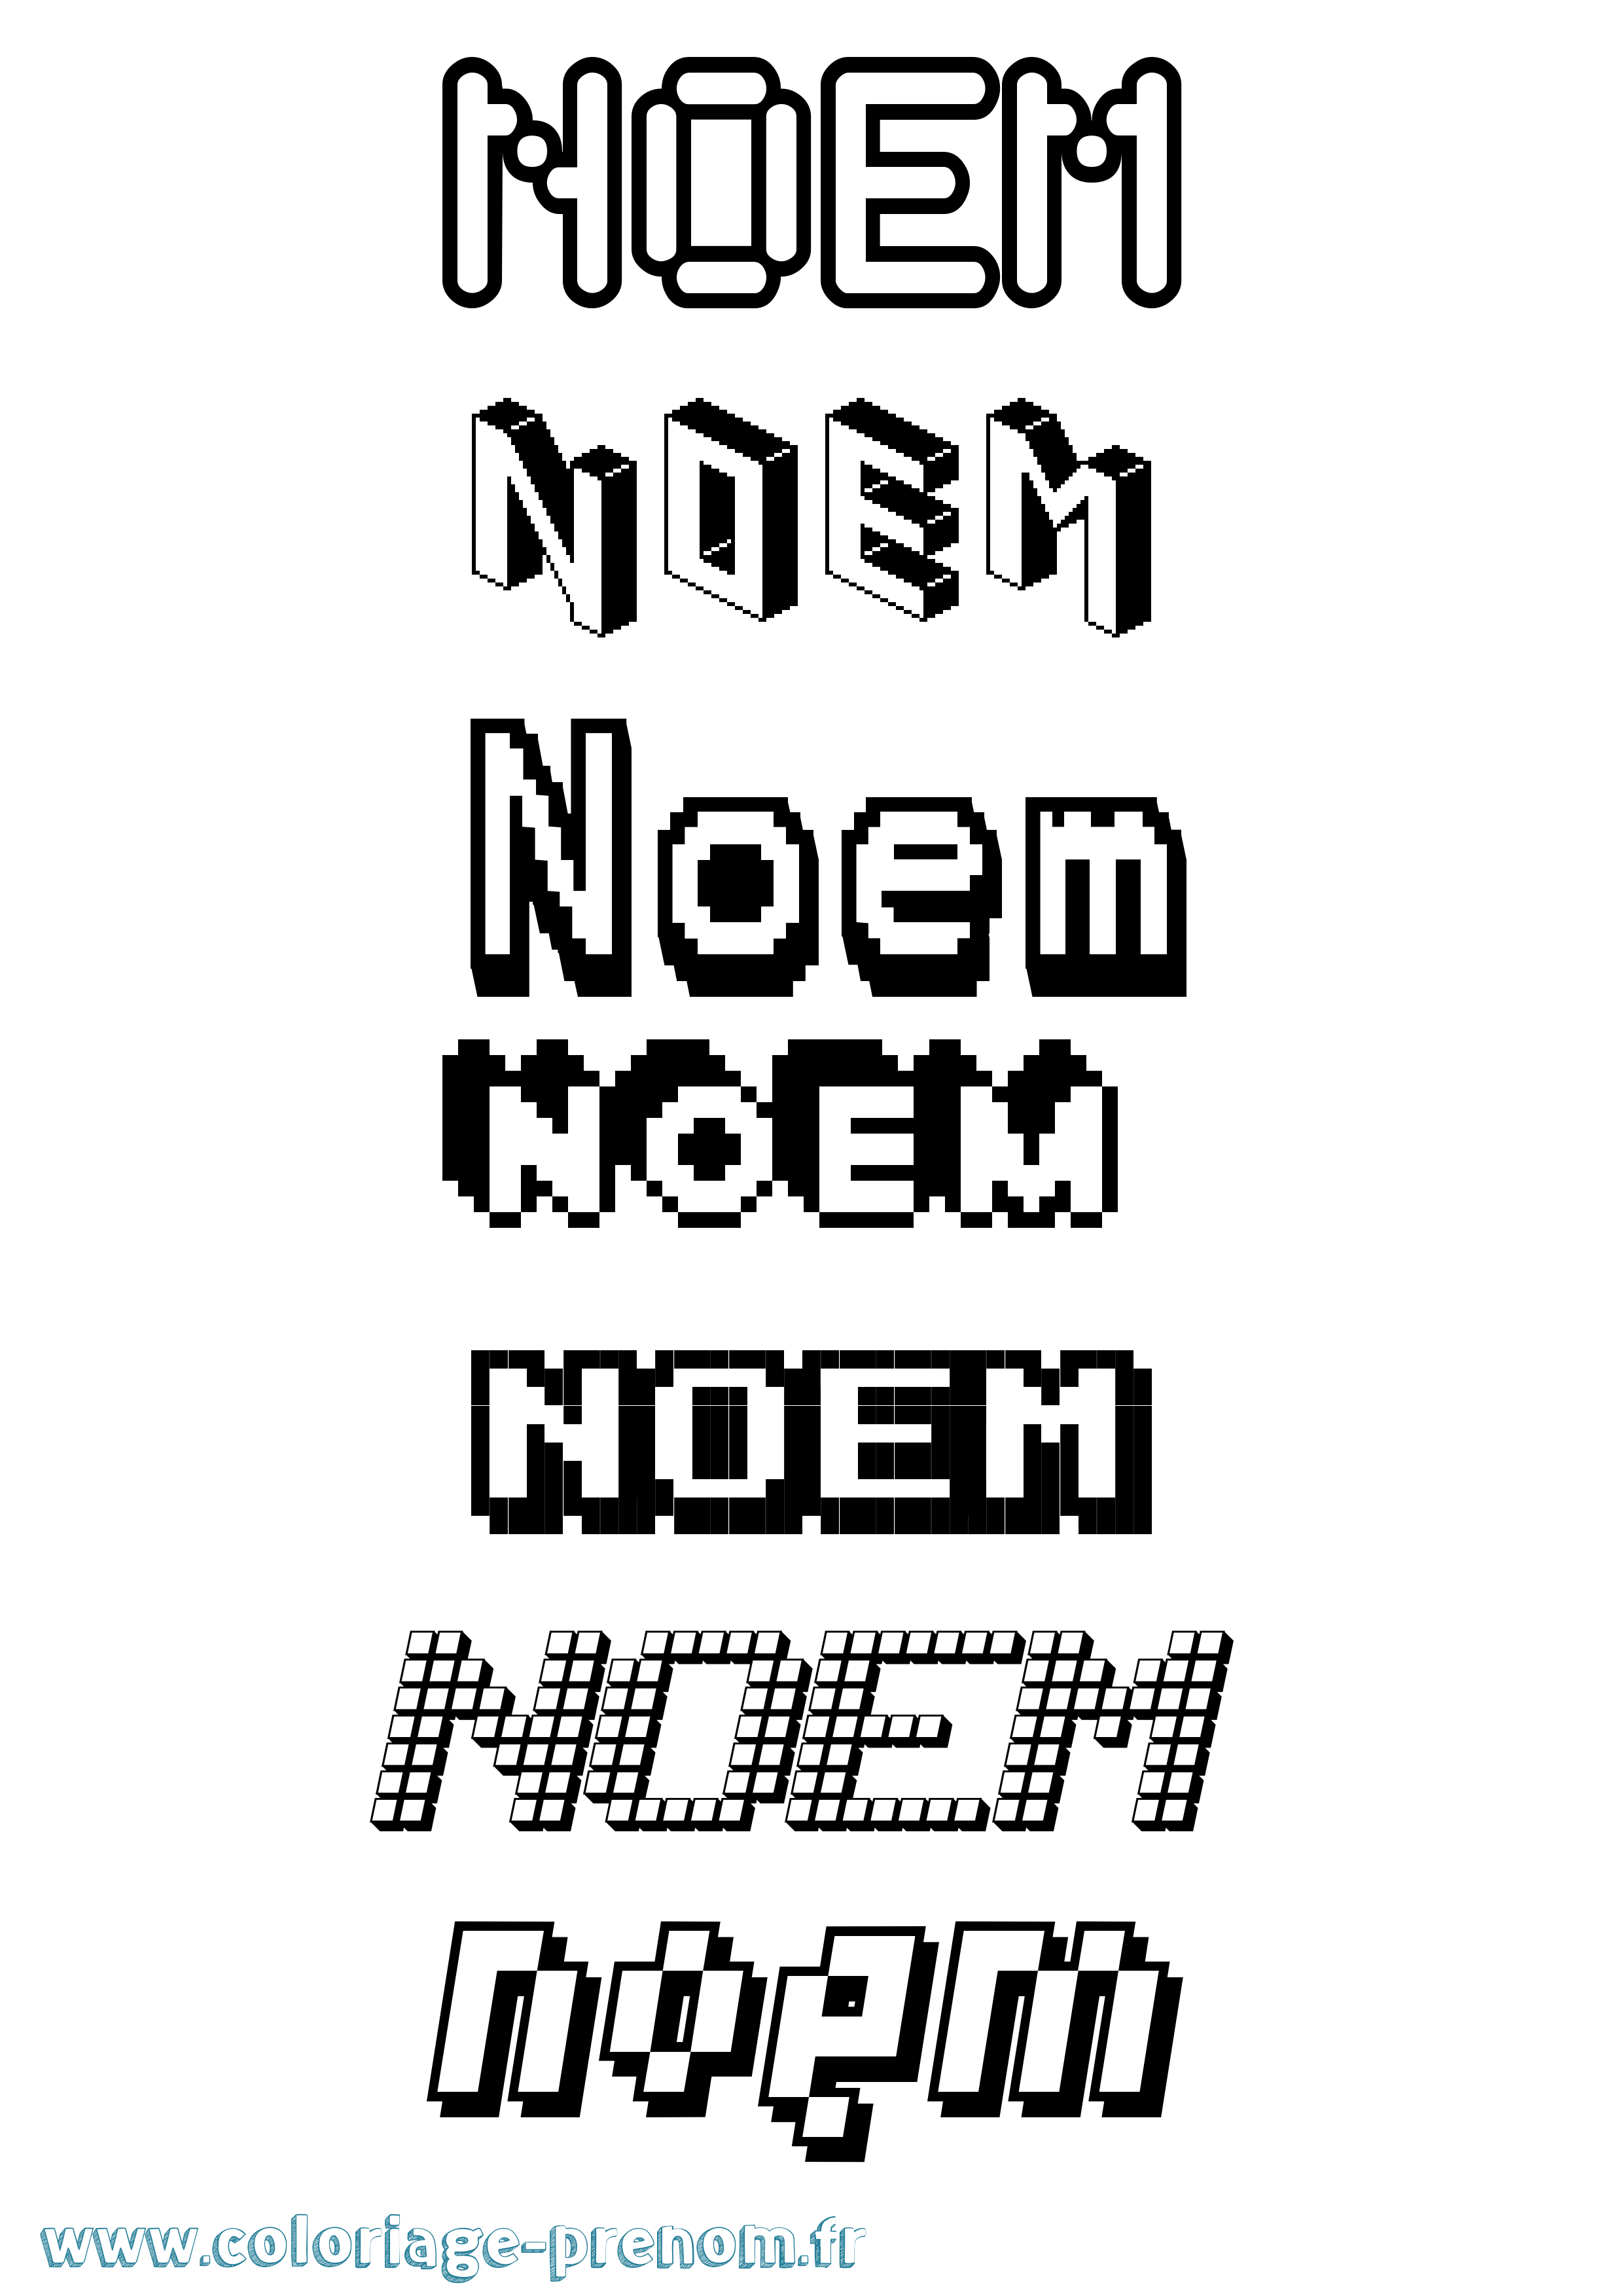 Coloriage prénom Noem Pixel